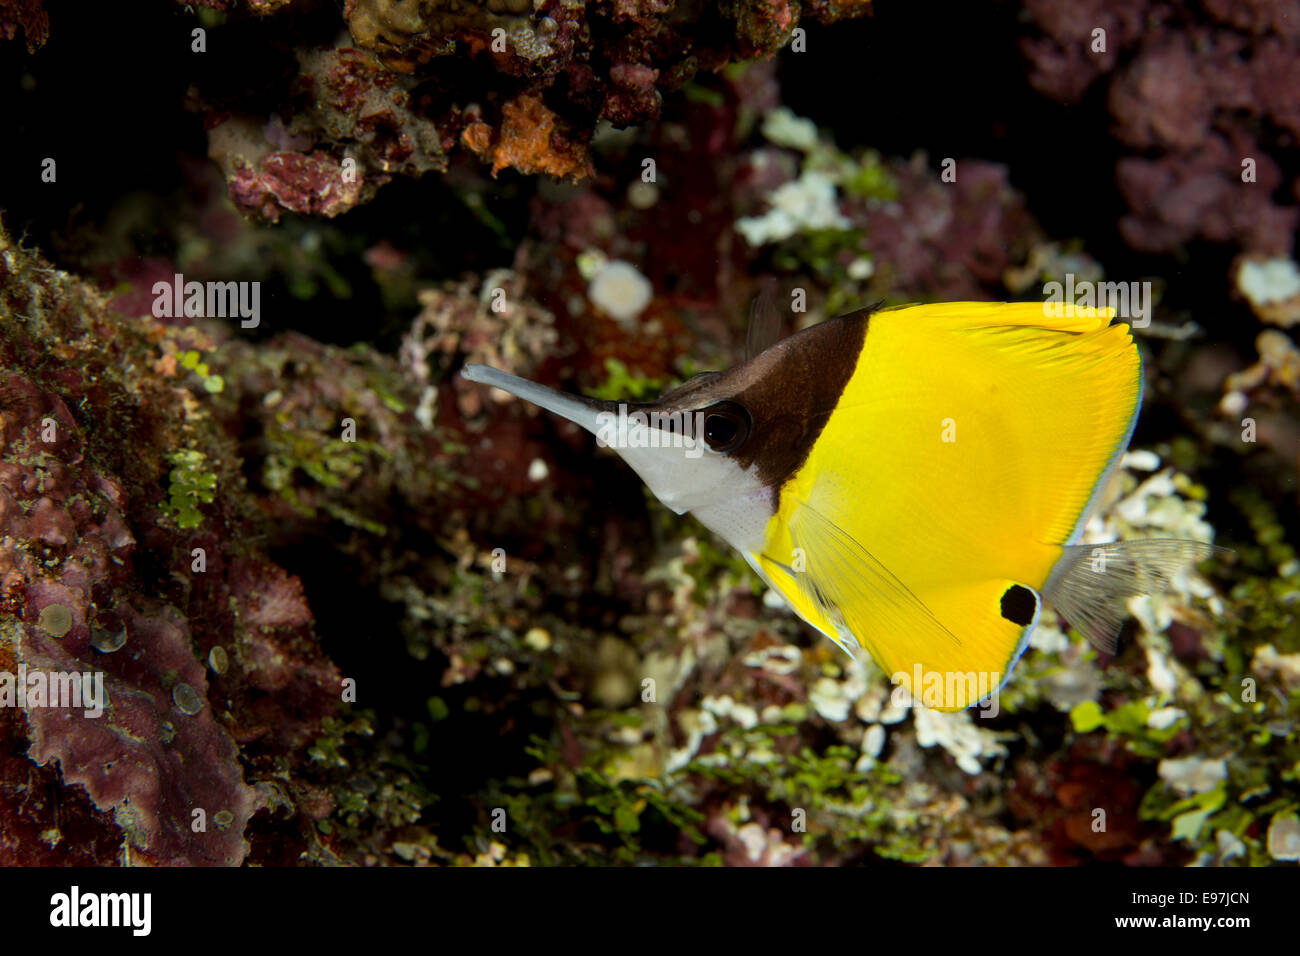 Close-up of Longnose butterflyfish. Stock Photo